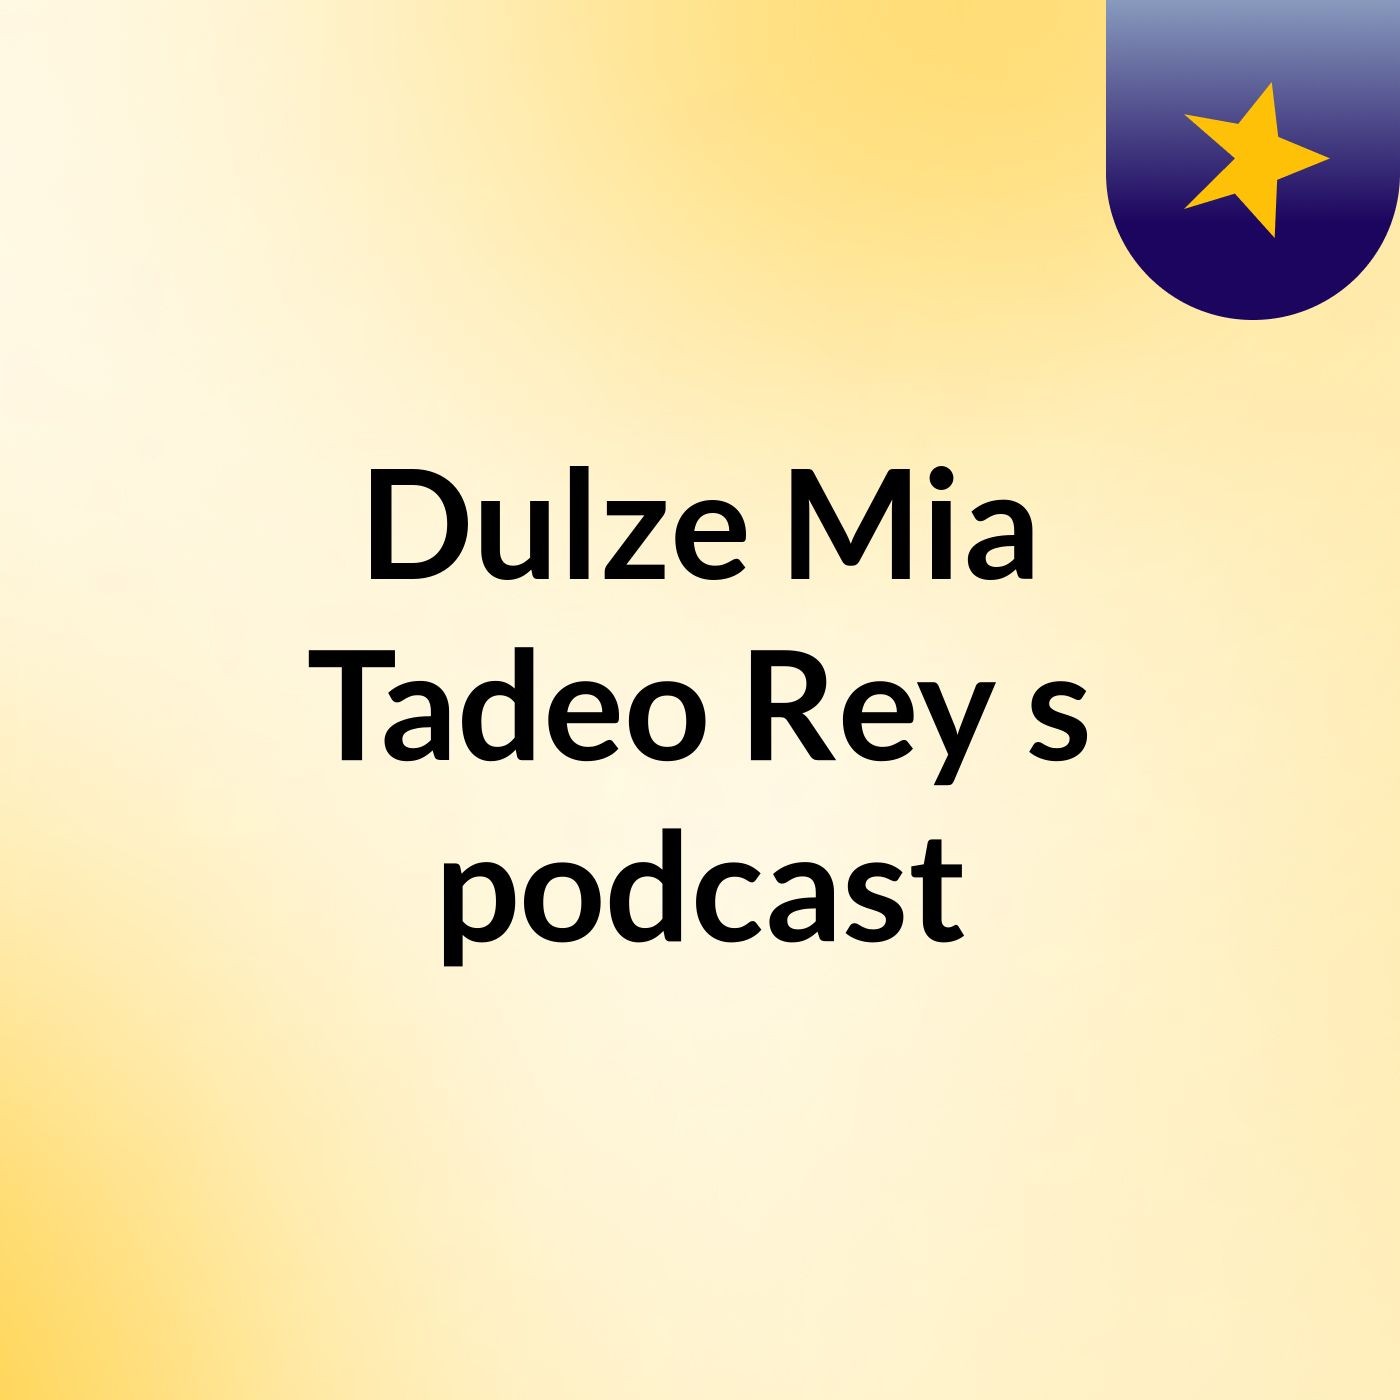 Episodio 25 - Dulze Mia Tadeo Rey's podcast